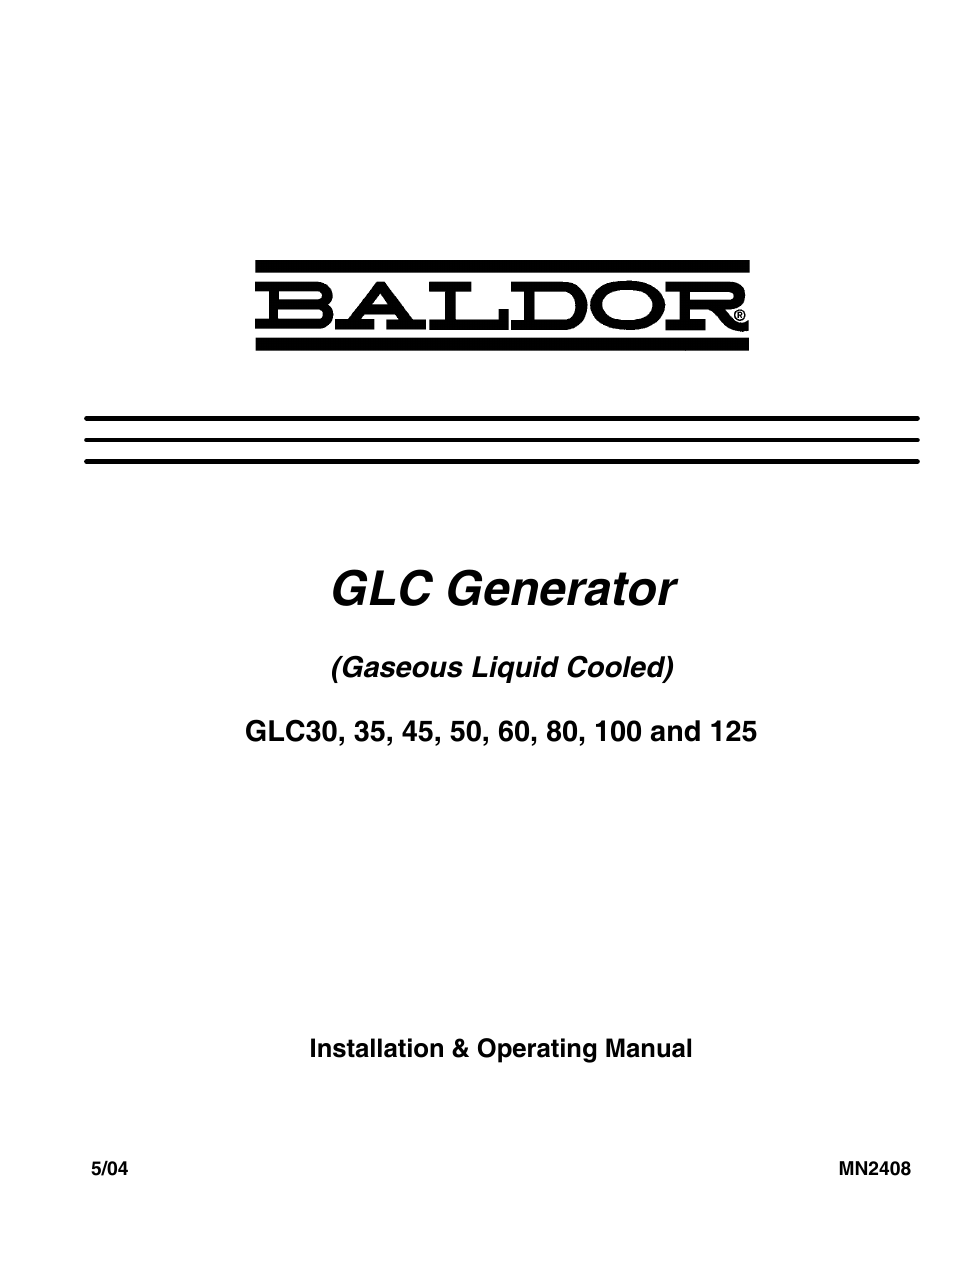 GLC GENERATOR GLC45